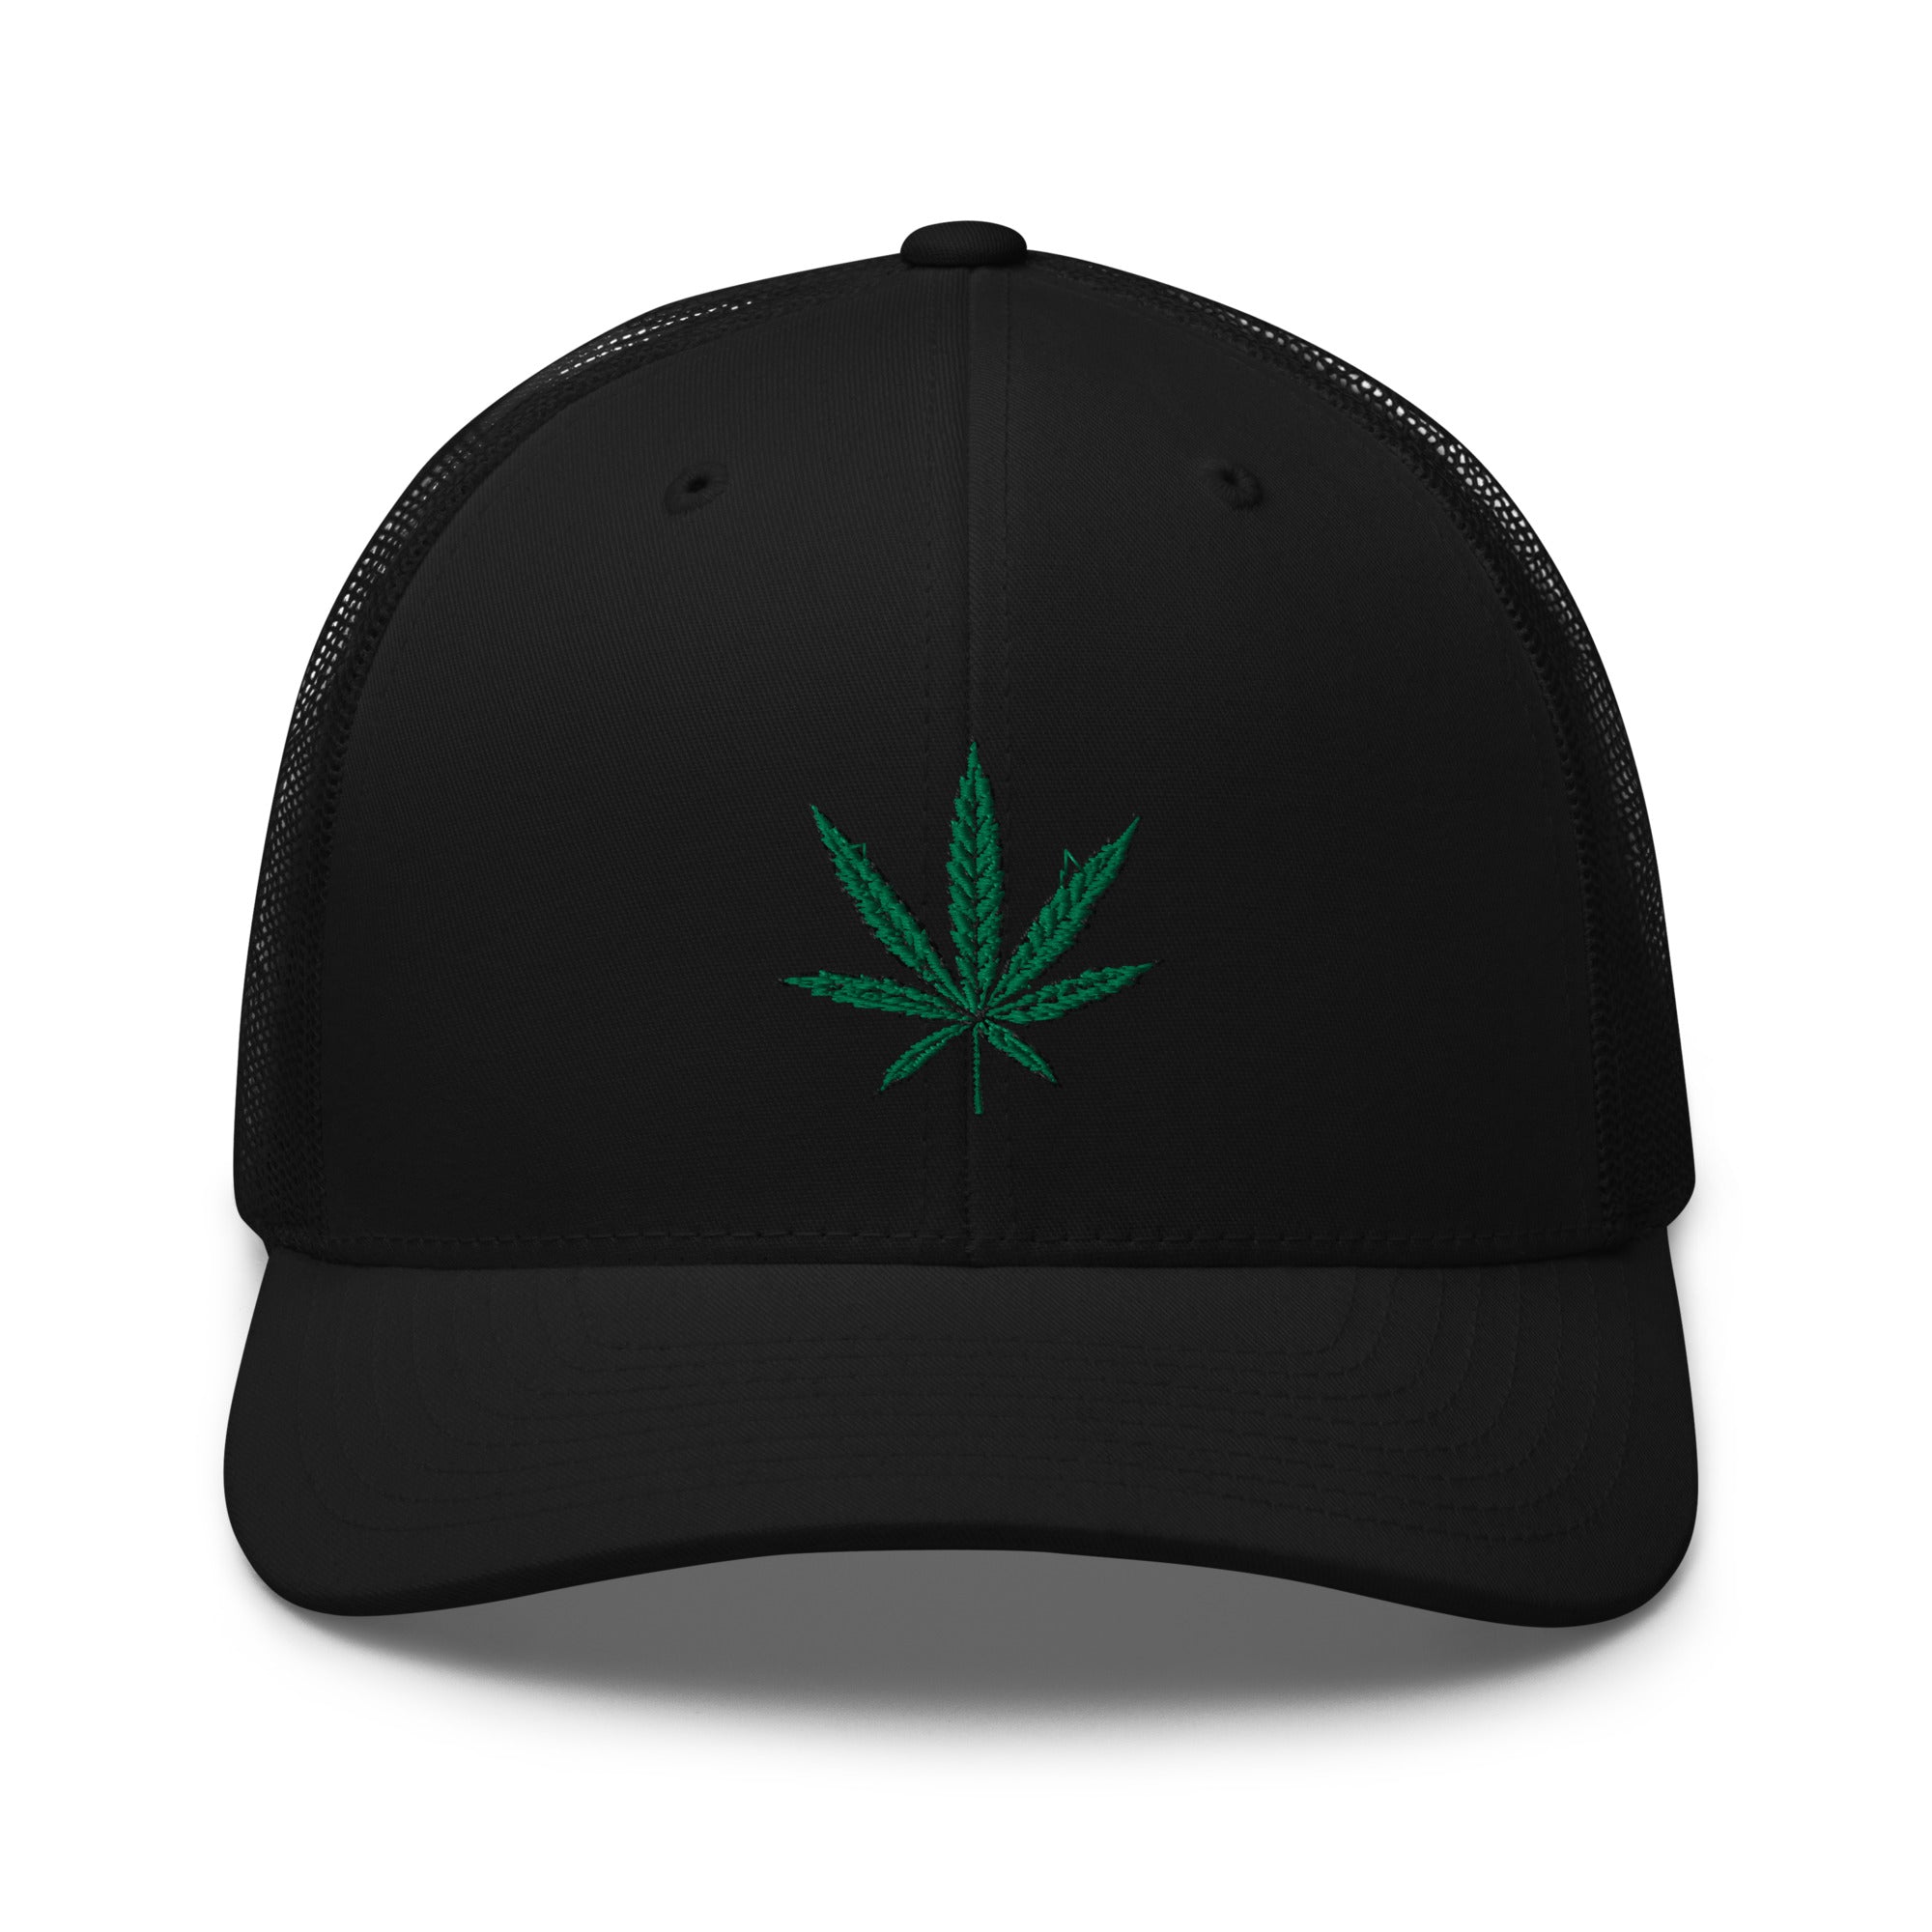 Cannabis Pot Leaf Marijuana Embroidered Retro Trucker Cap Snapback Hat